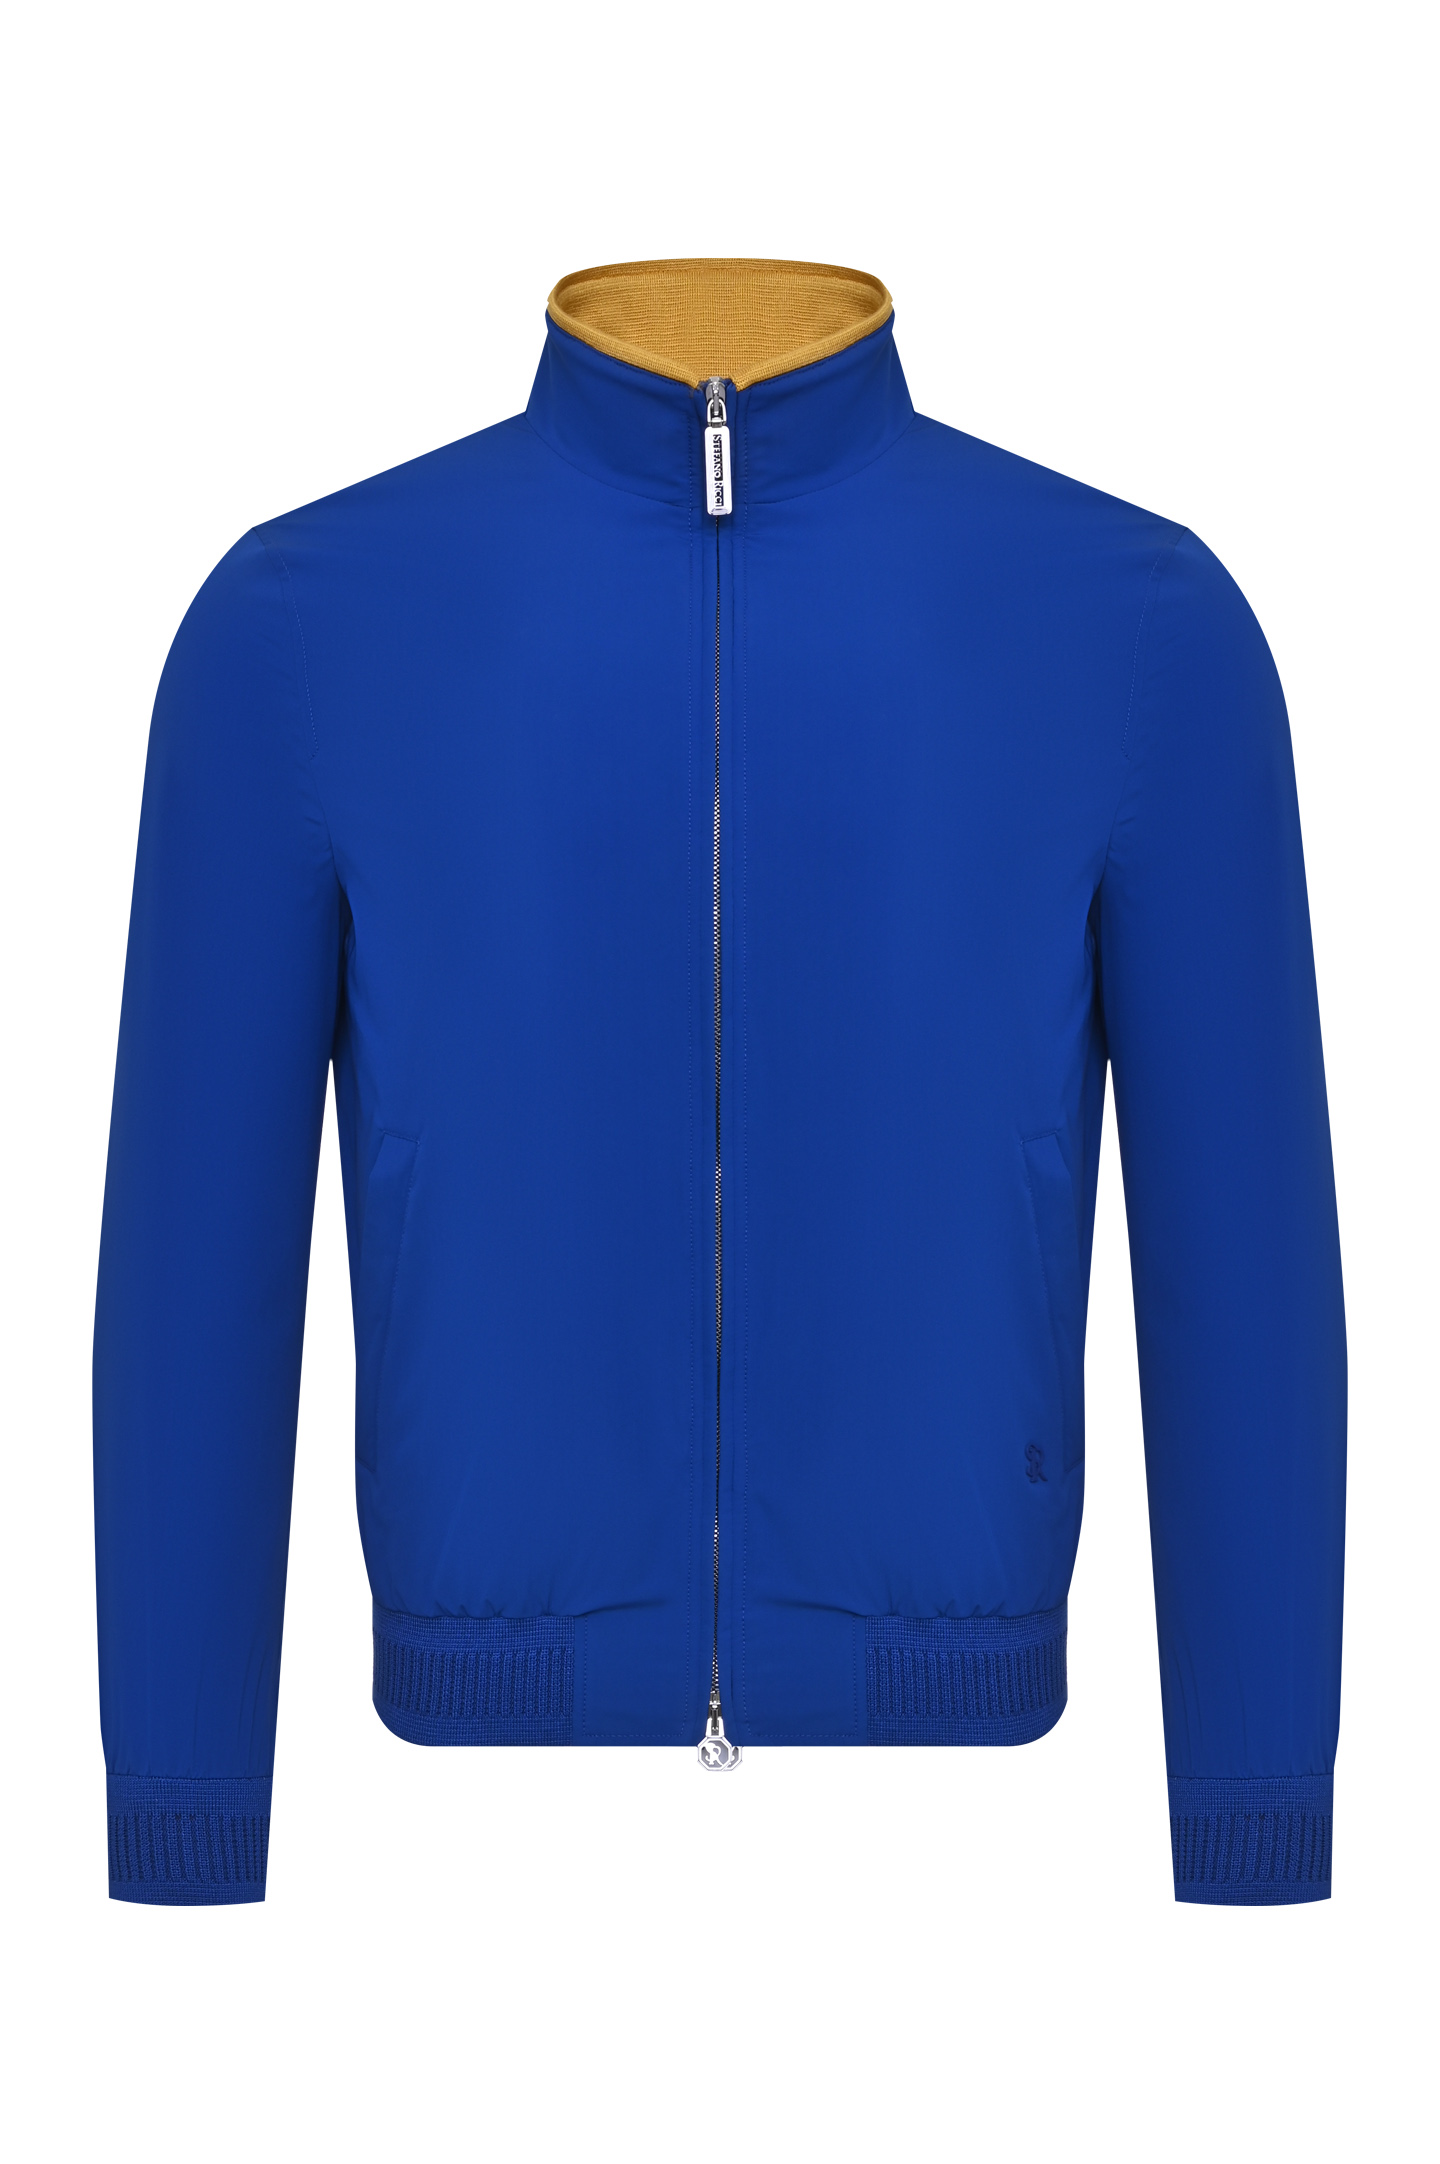 Куртка STEFANO RICCI MDJ0100340 4508, цвет: Синий, Мужской